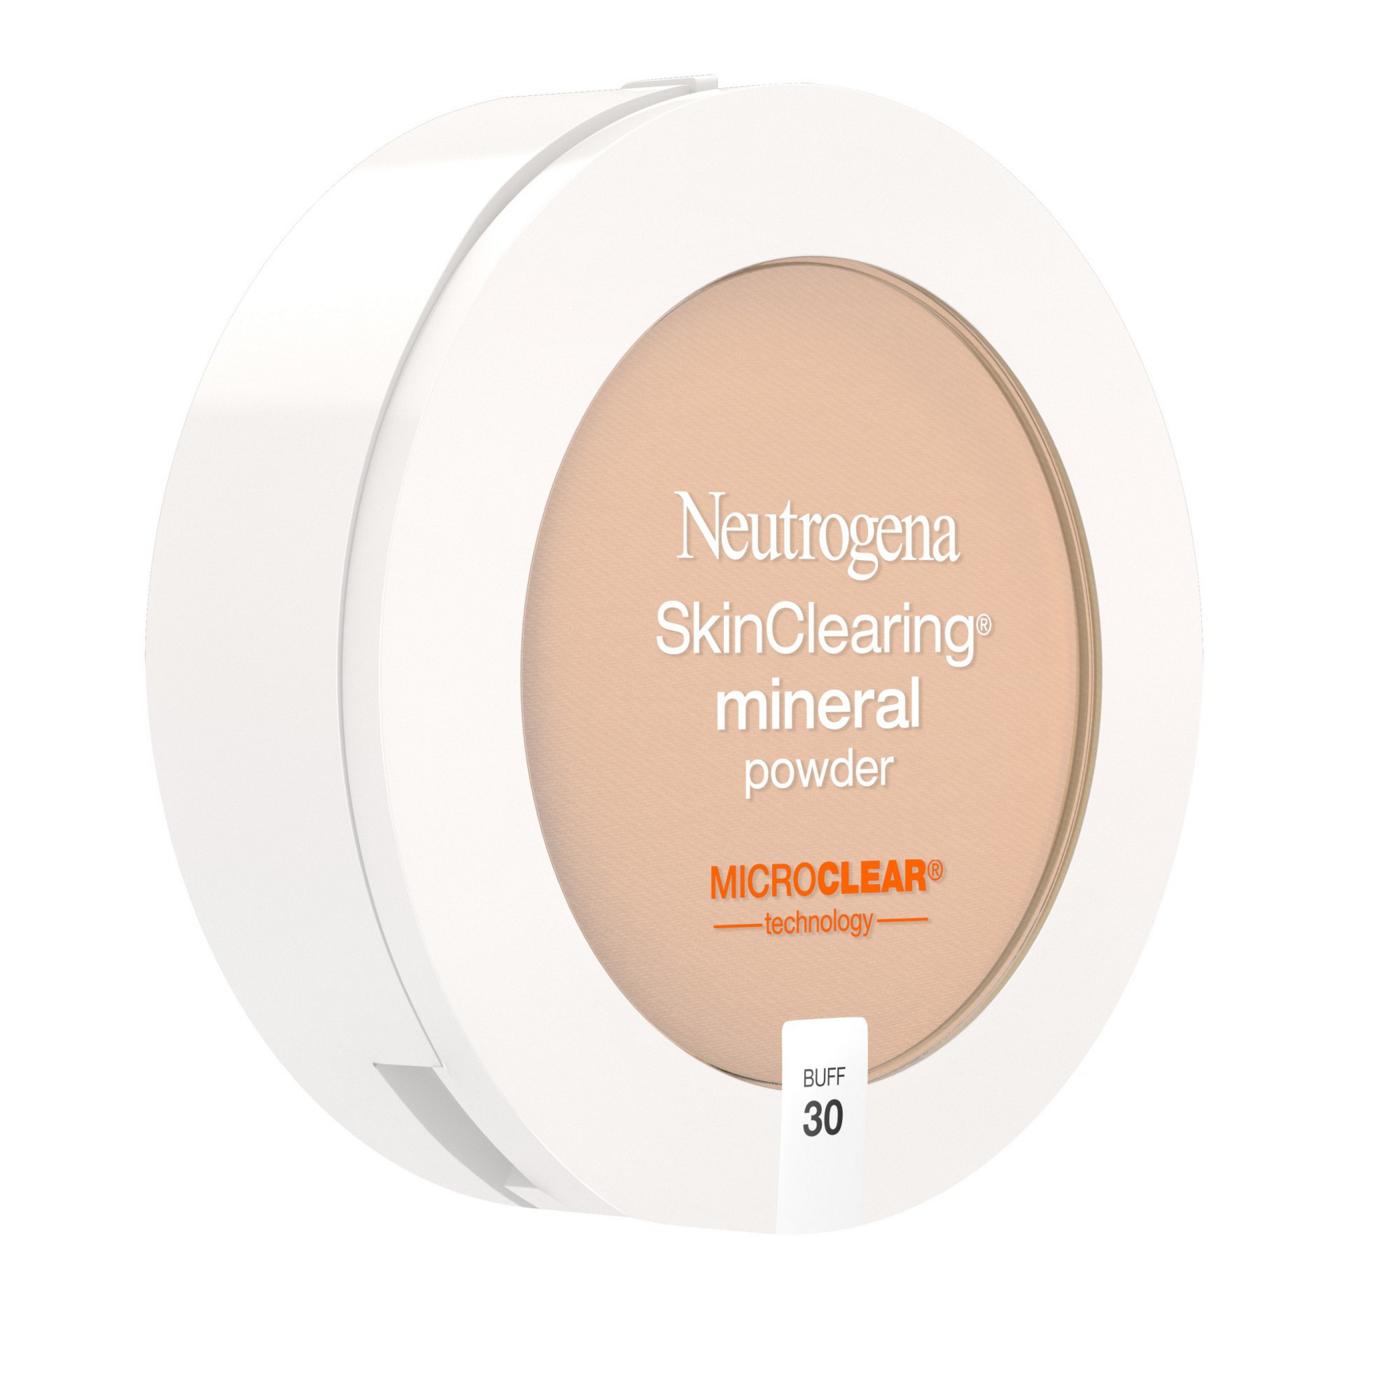 Neutrogena Skinclearing Mineral Powder 30 Buff; image 5 of 5